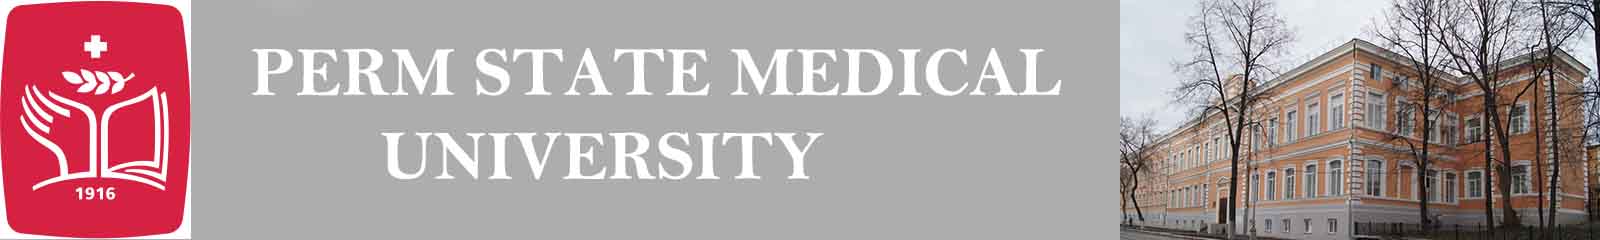 perm state medical university